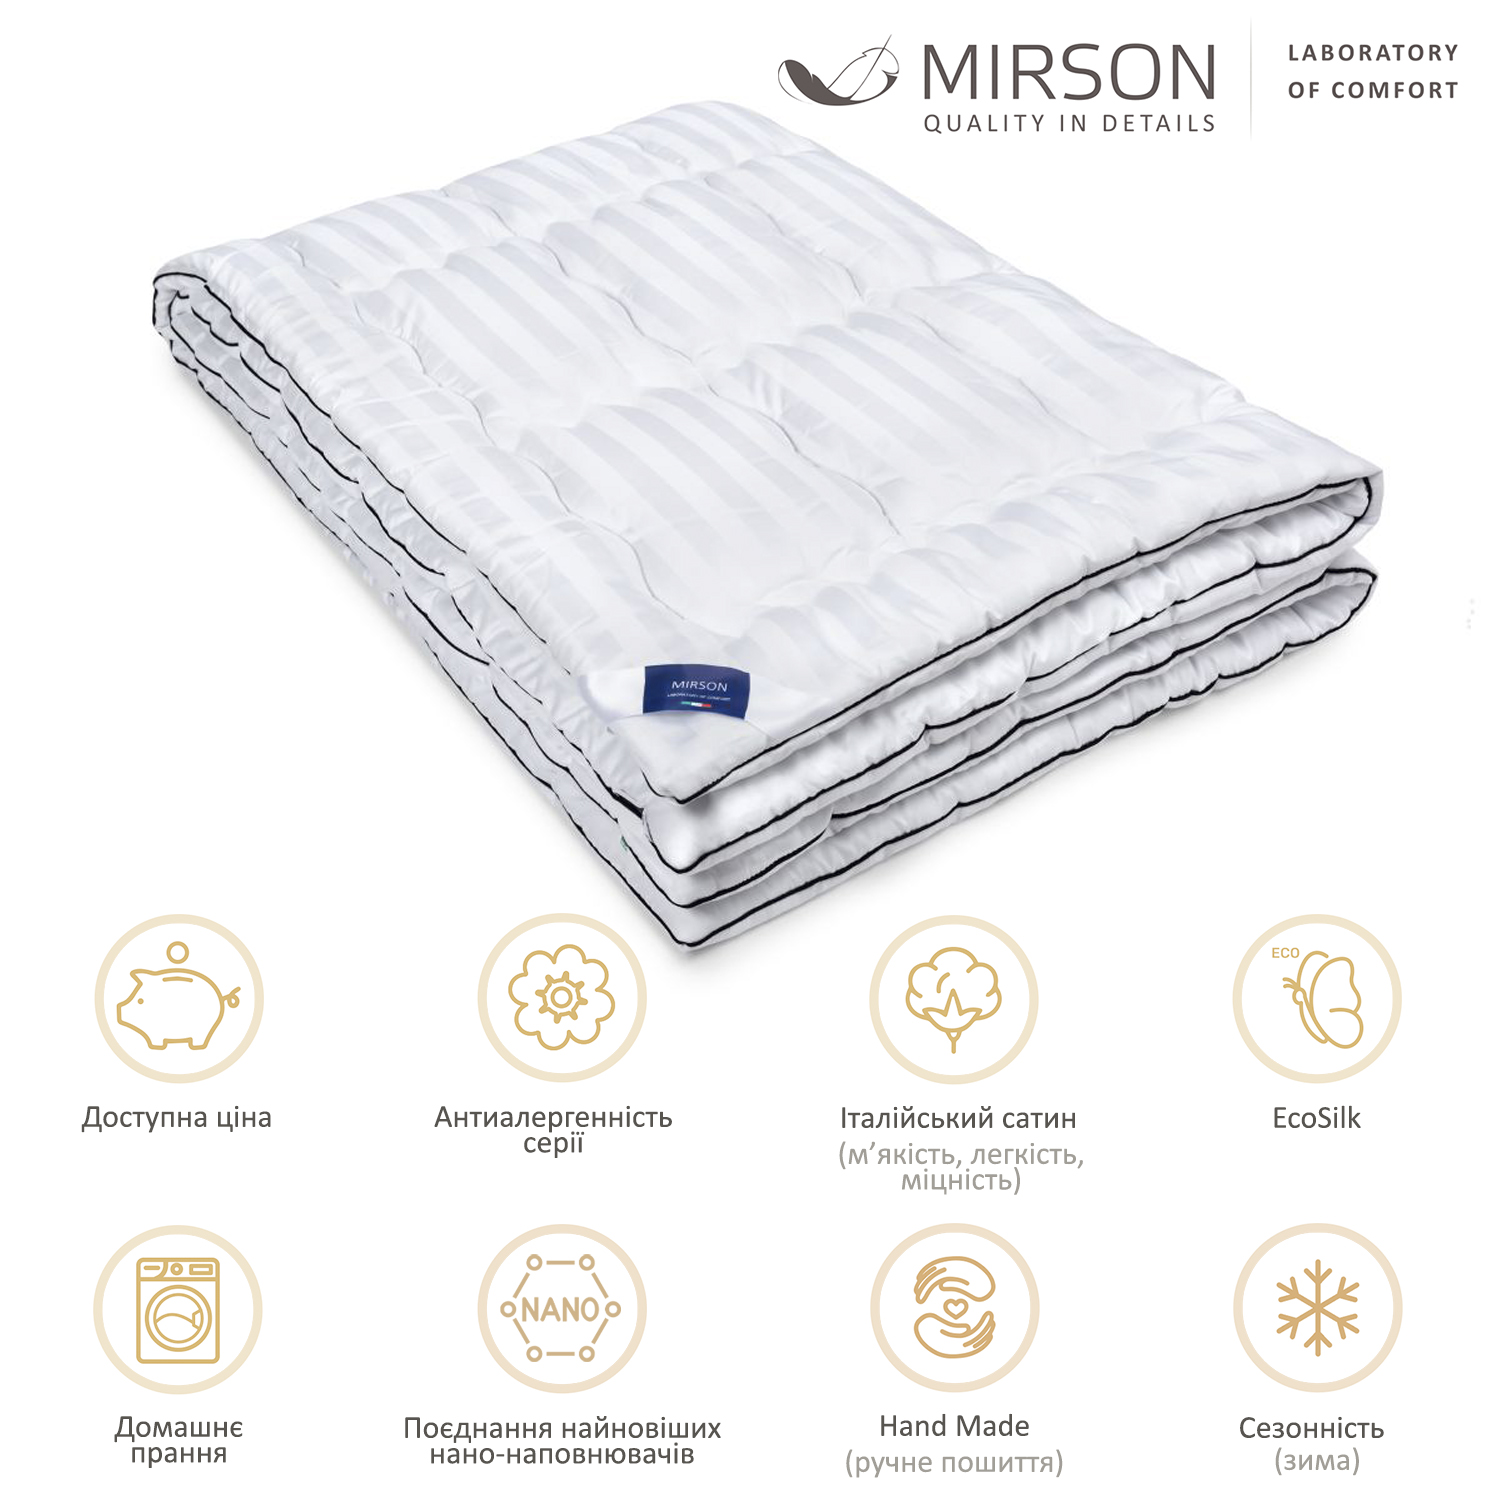 Одеяло антиаллергенное MirSon Premium Royal Pearl Hand Made №069, зимнее, 200x220 см, белое (58590076) - фото 5